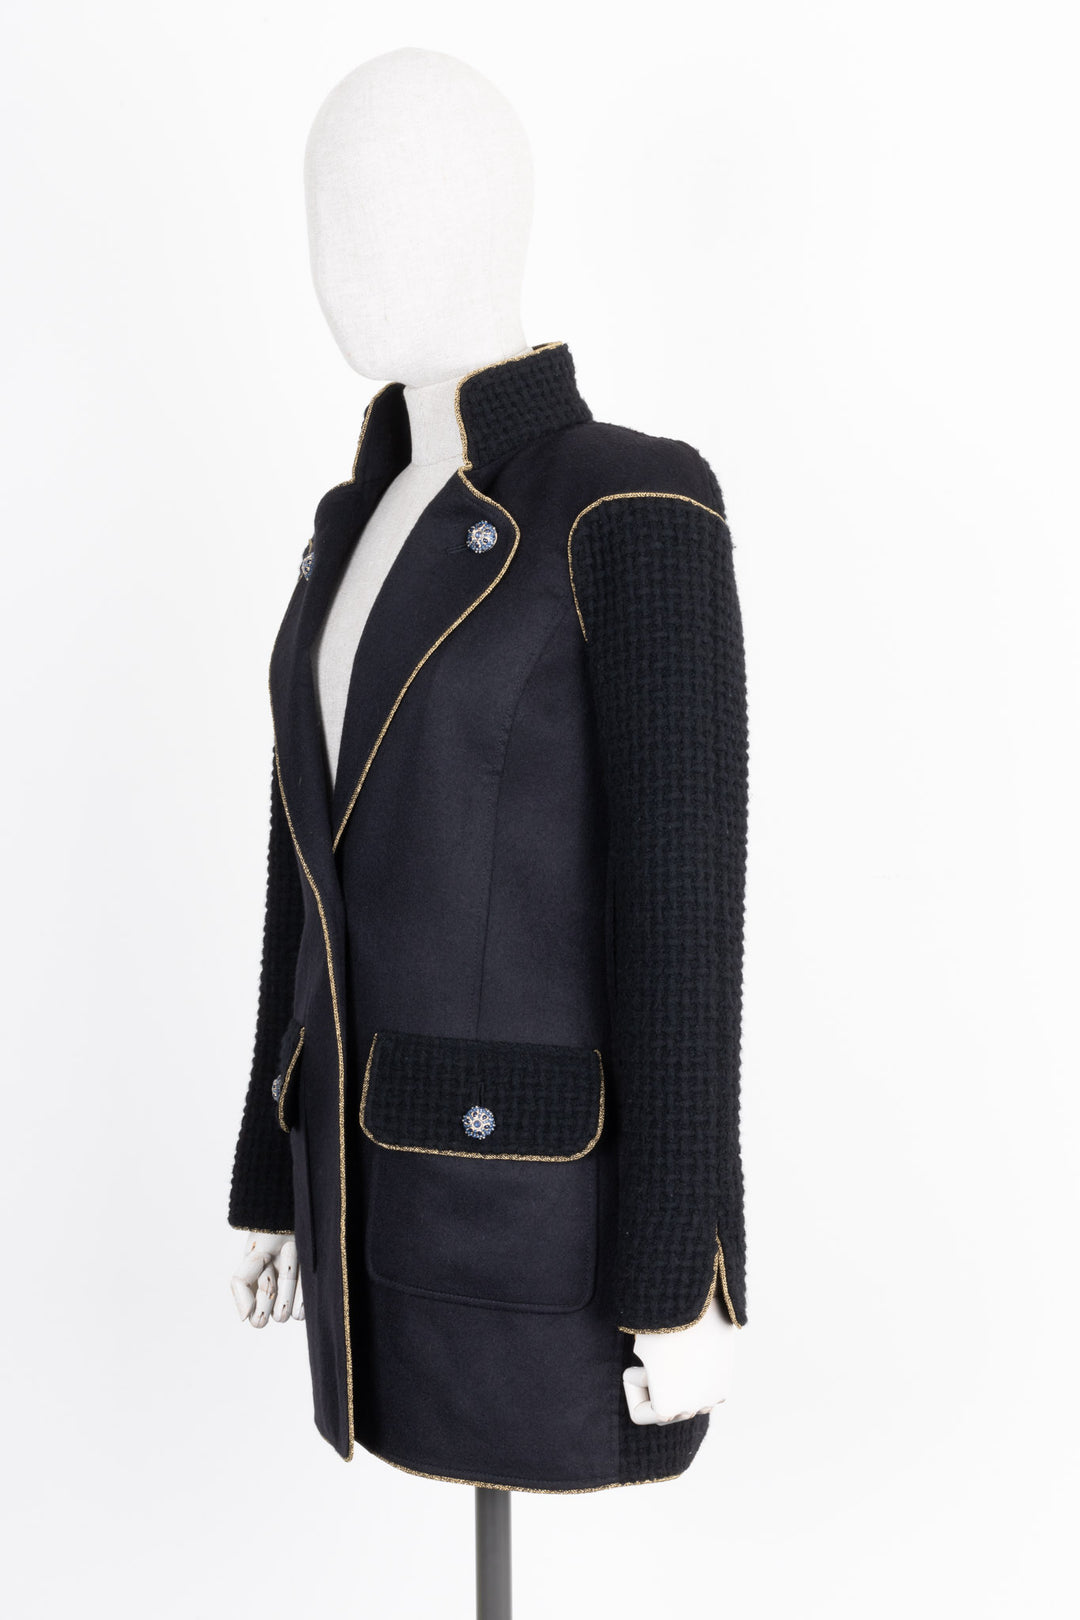 CHANEL Paris Salzburg 2015 Knit Short Coat Black Wool